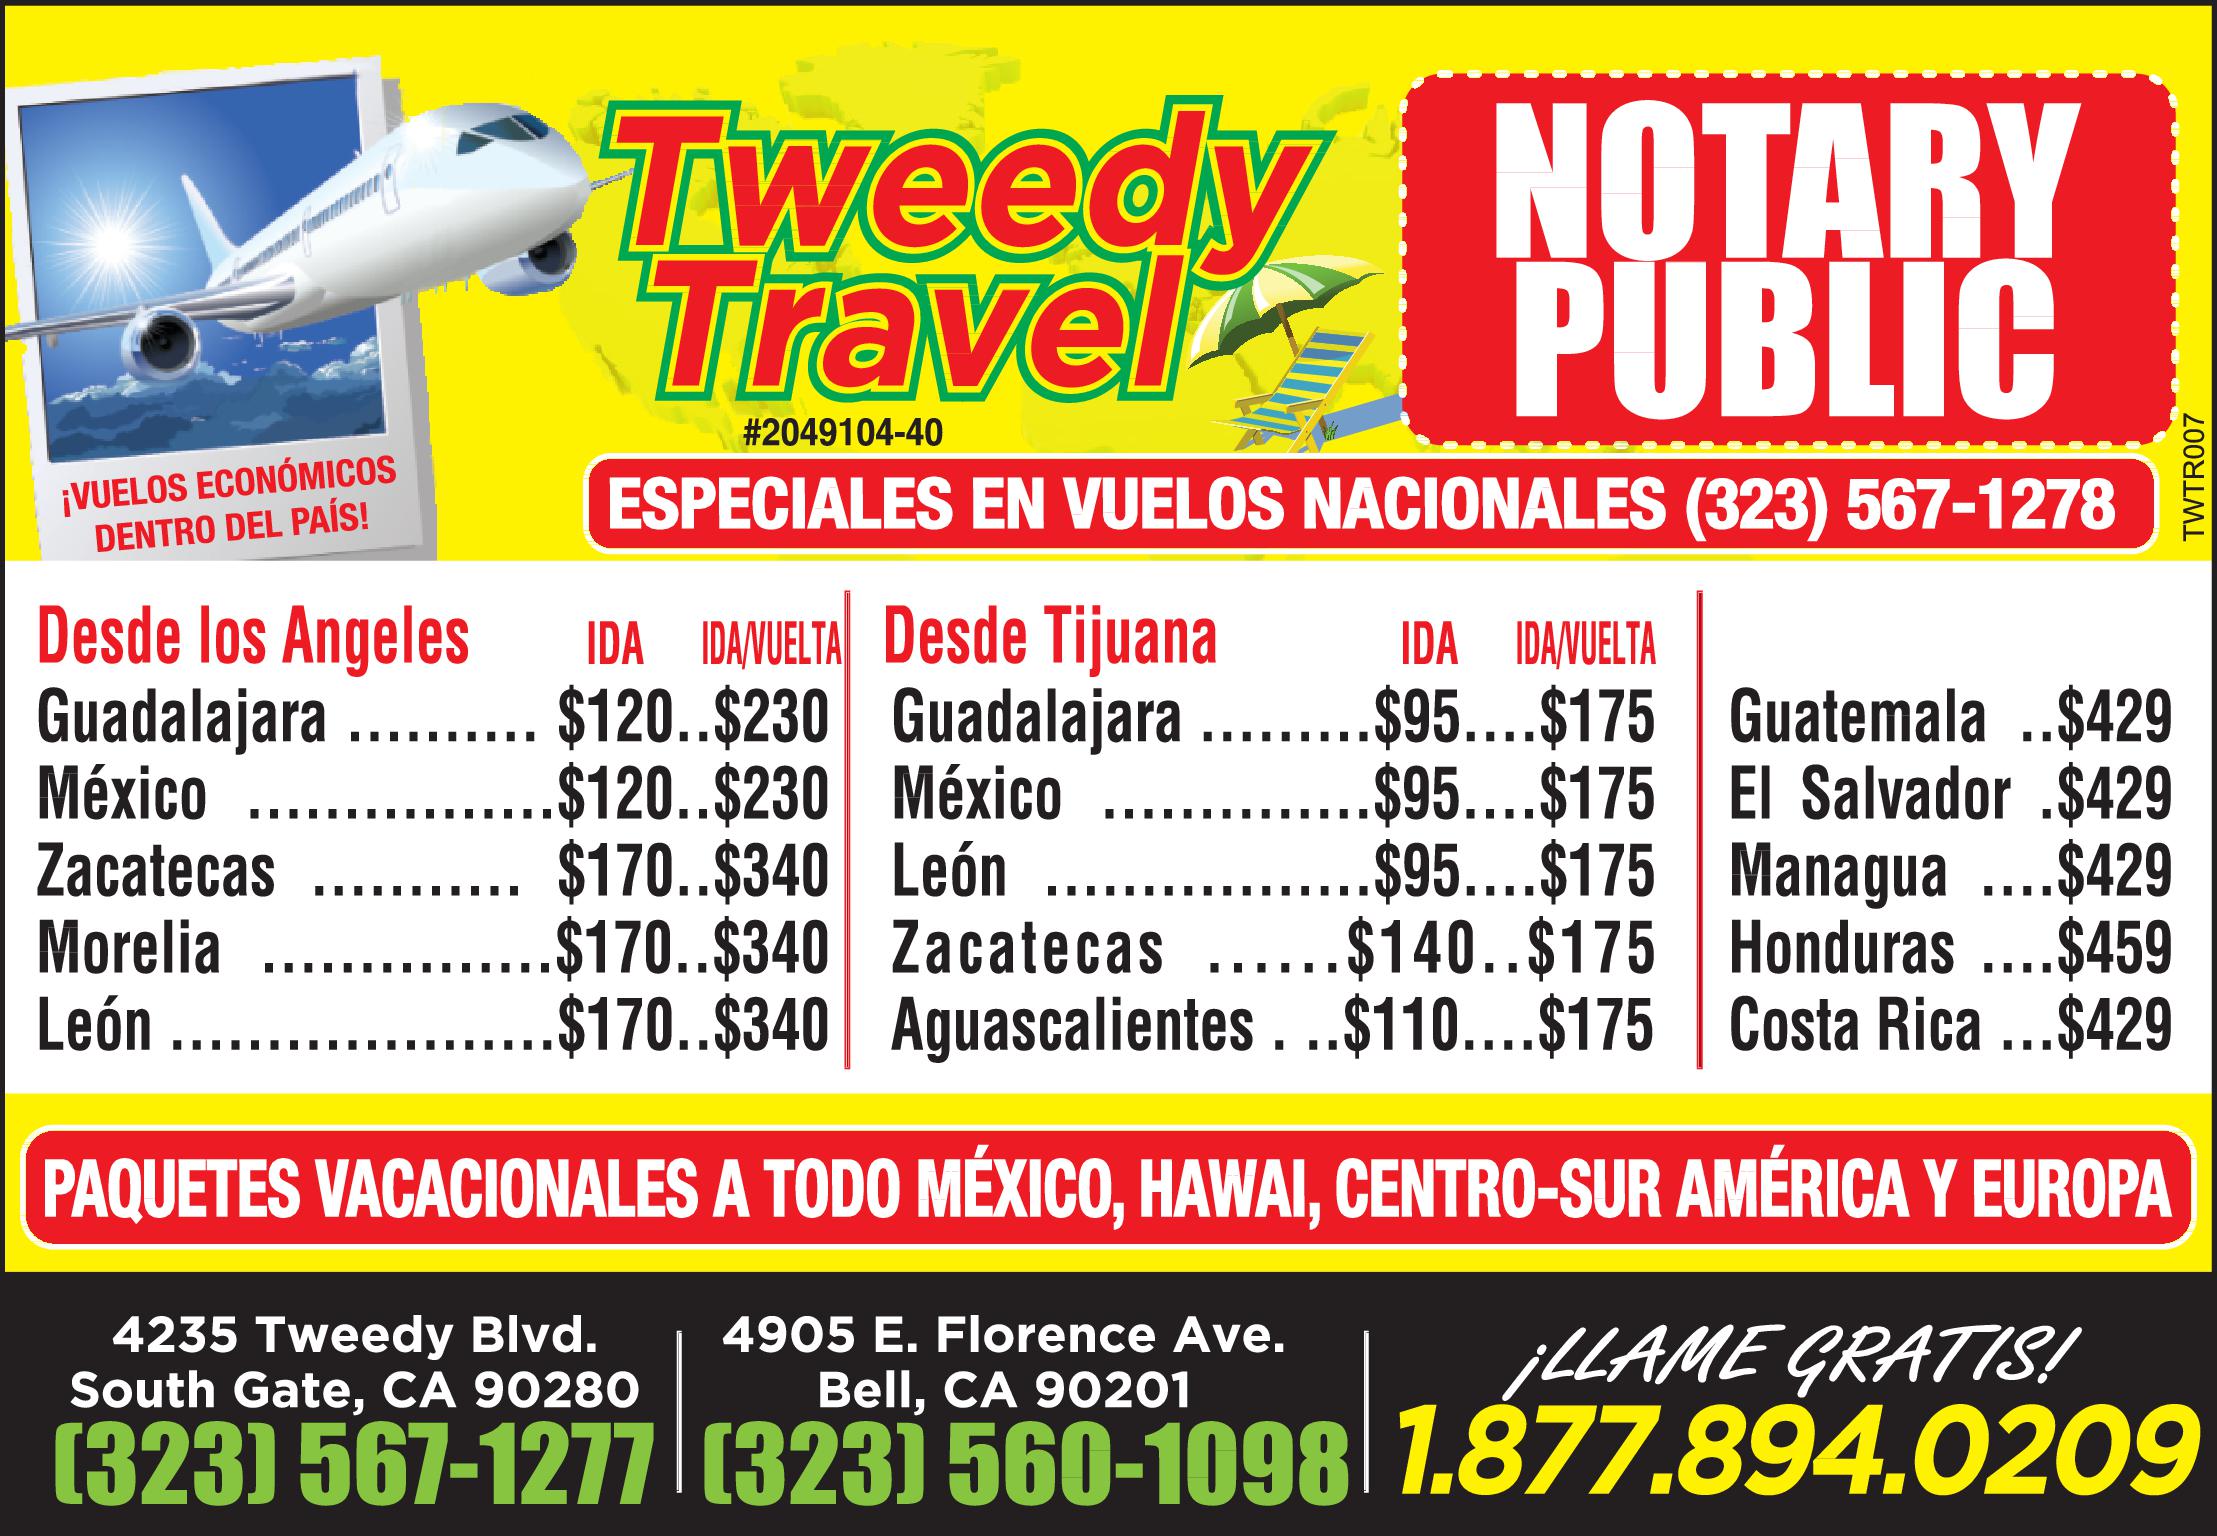 Tweedy Travel Notary Public 